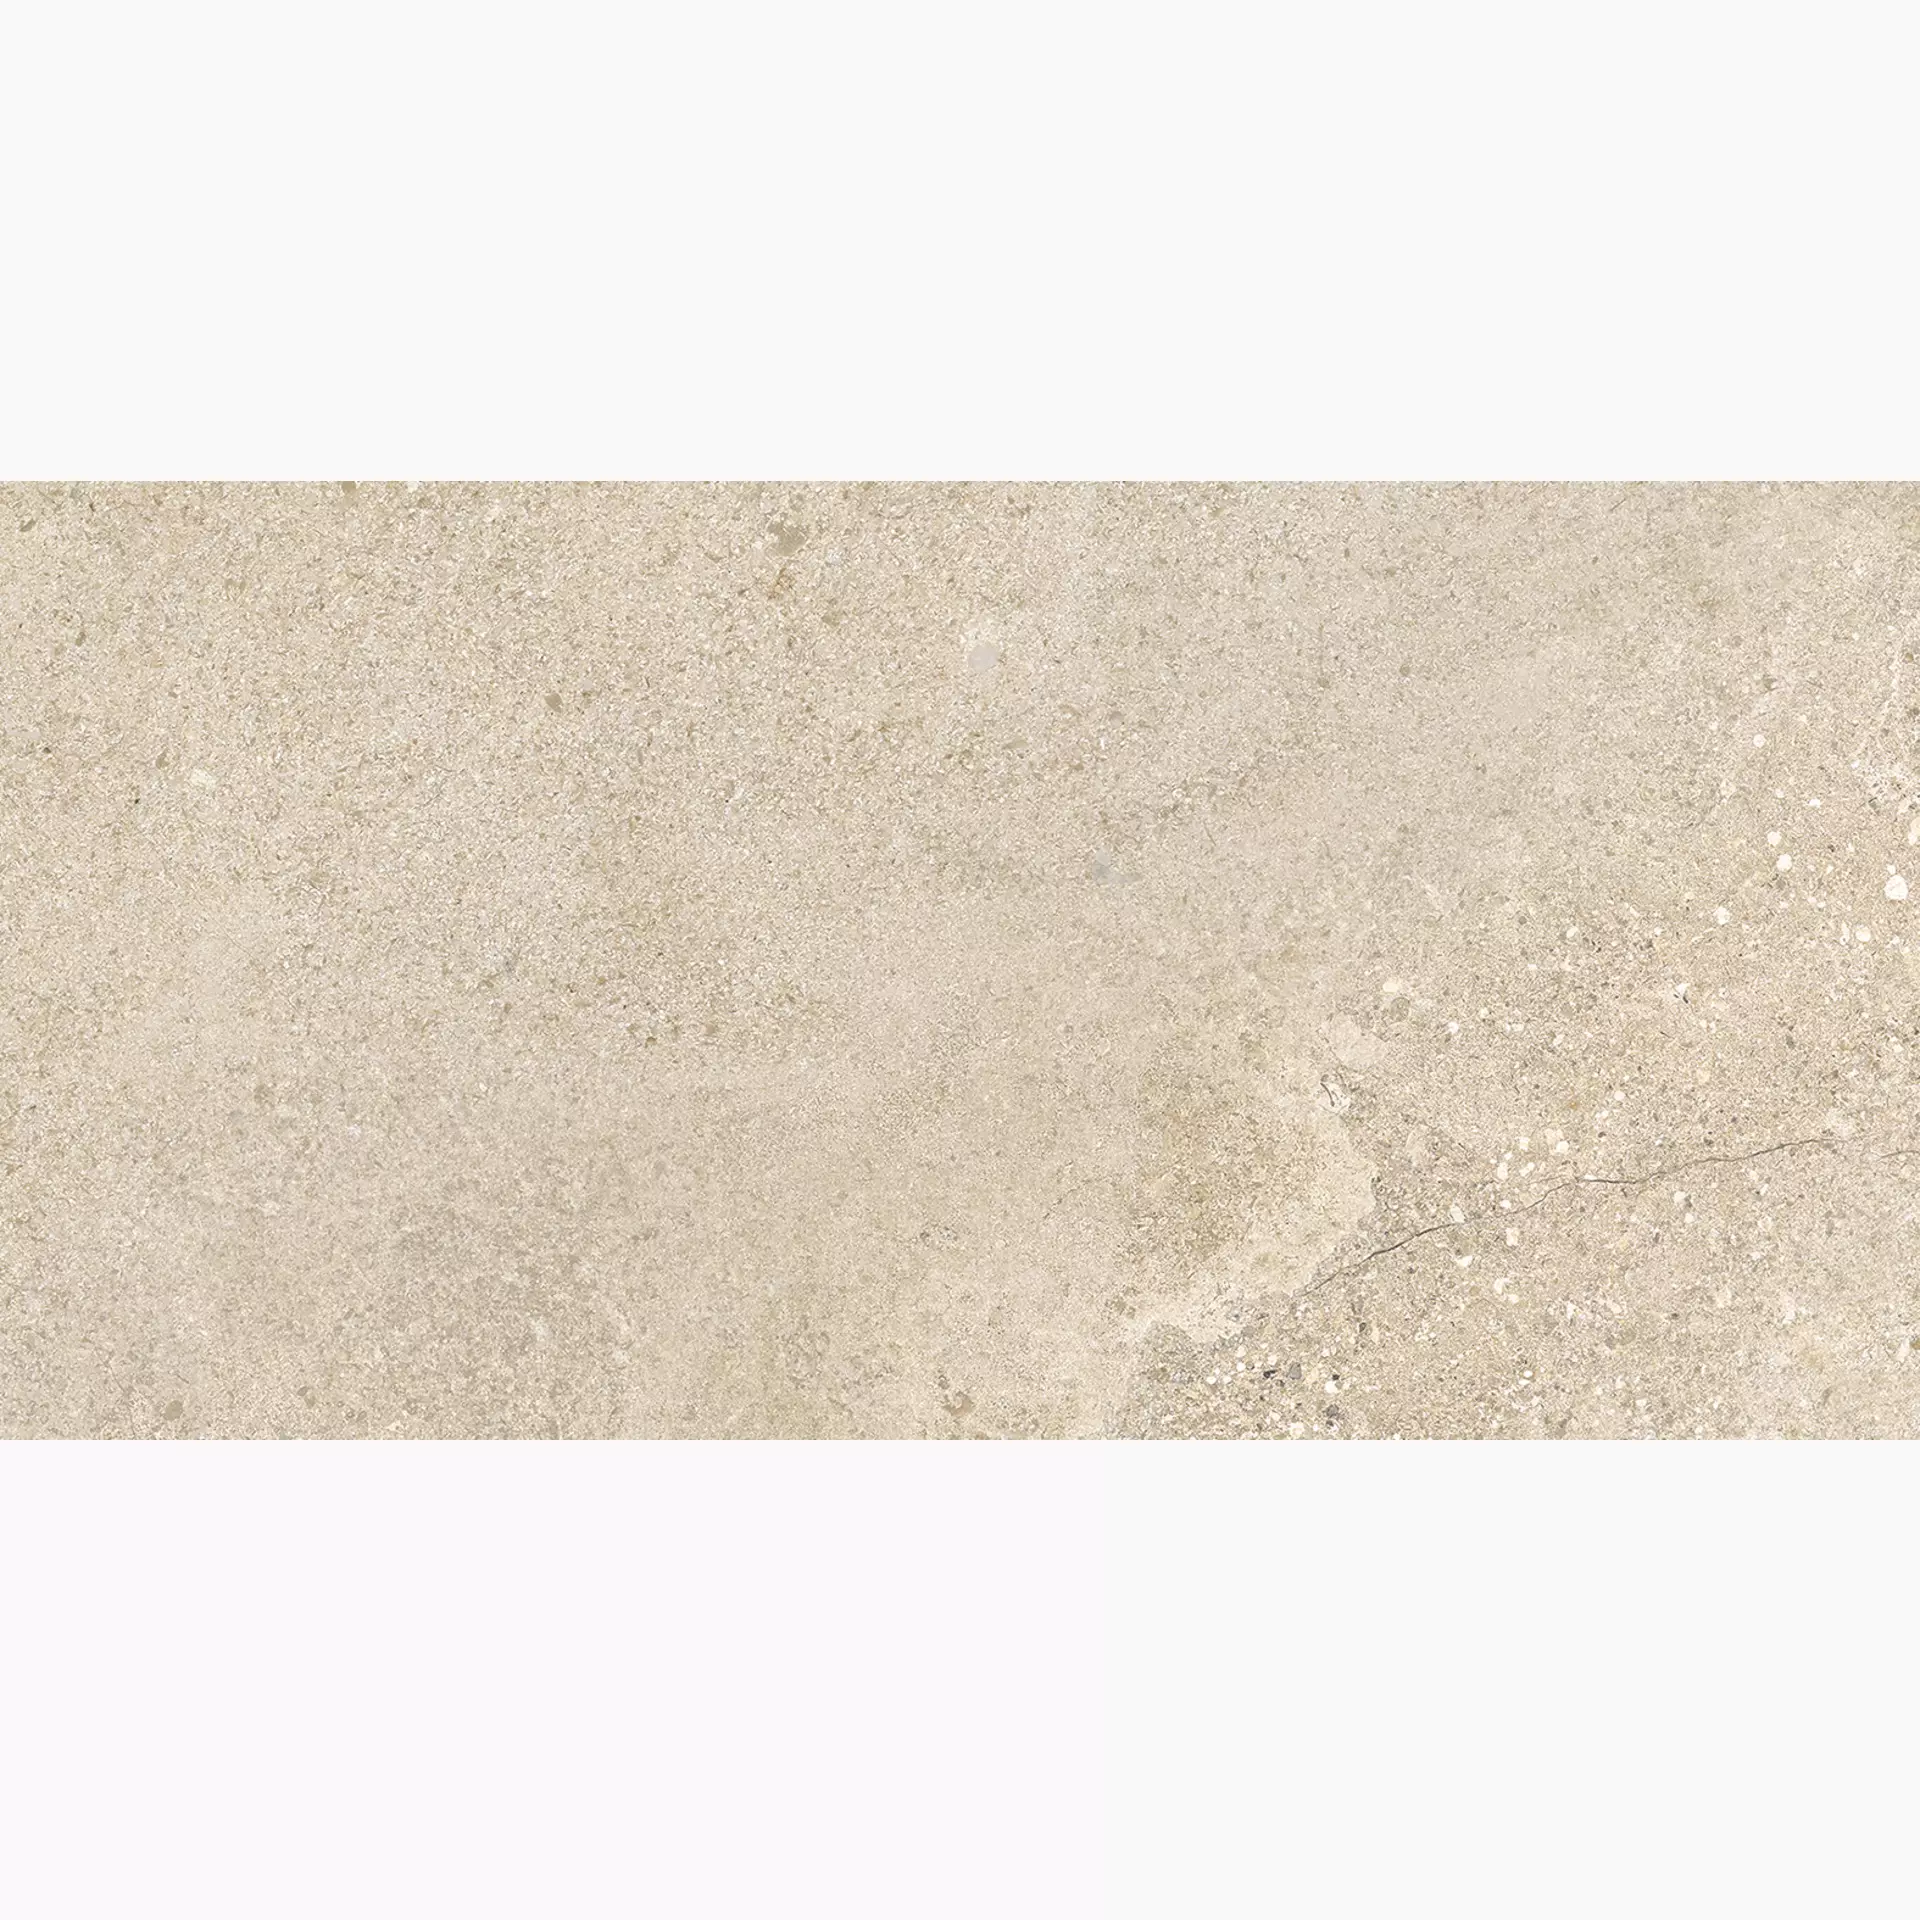 Ragno Kalkstone Sand Strutturato Sand RC5Z strukturiert 20x40cm 9mm